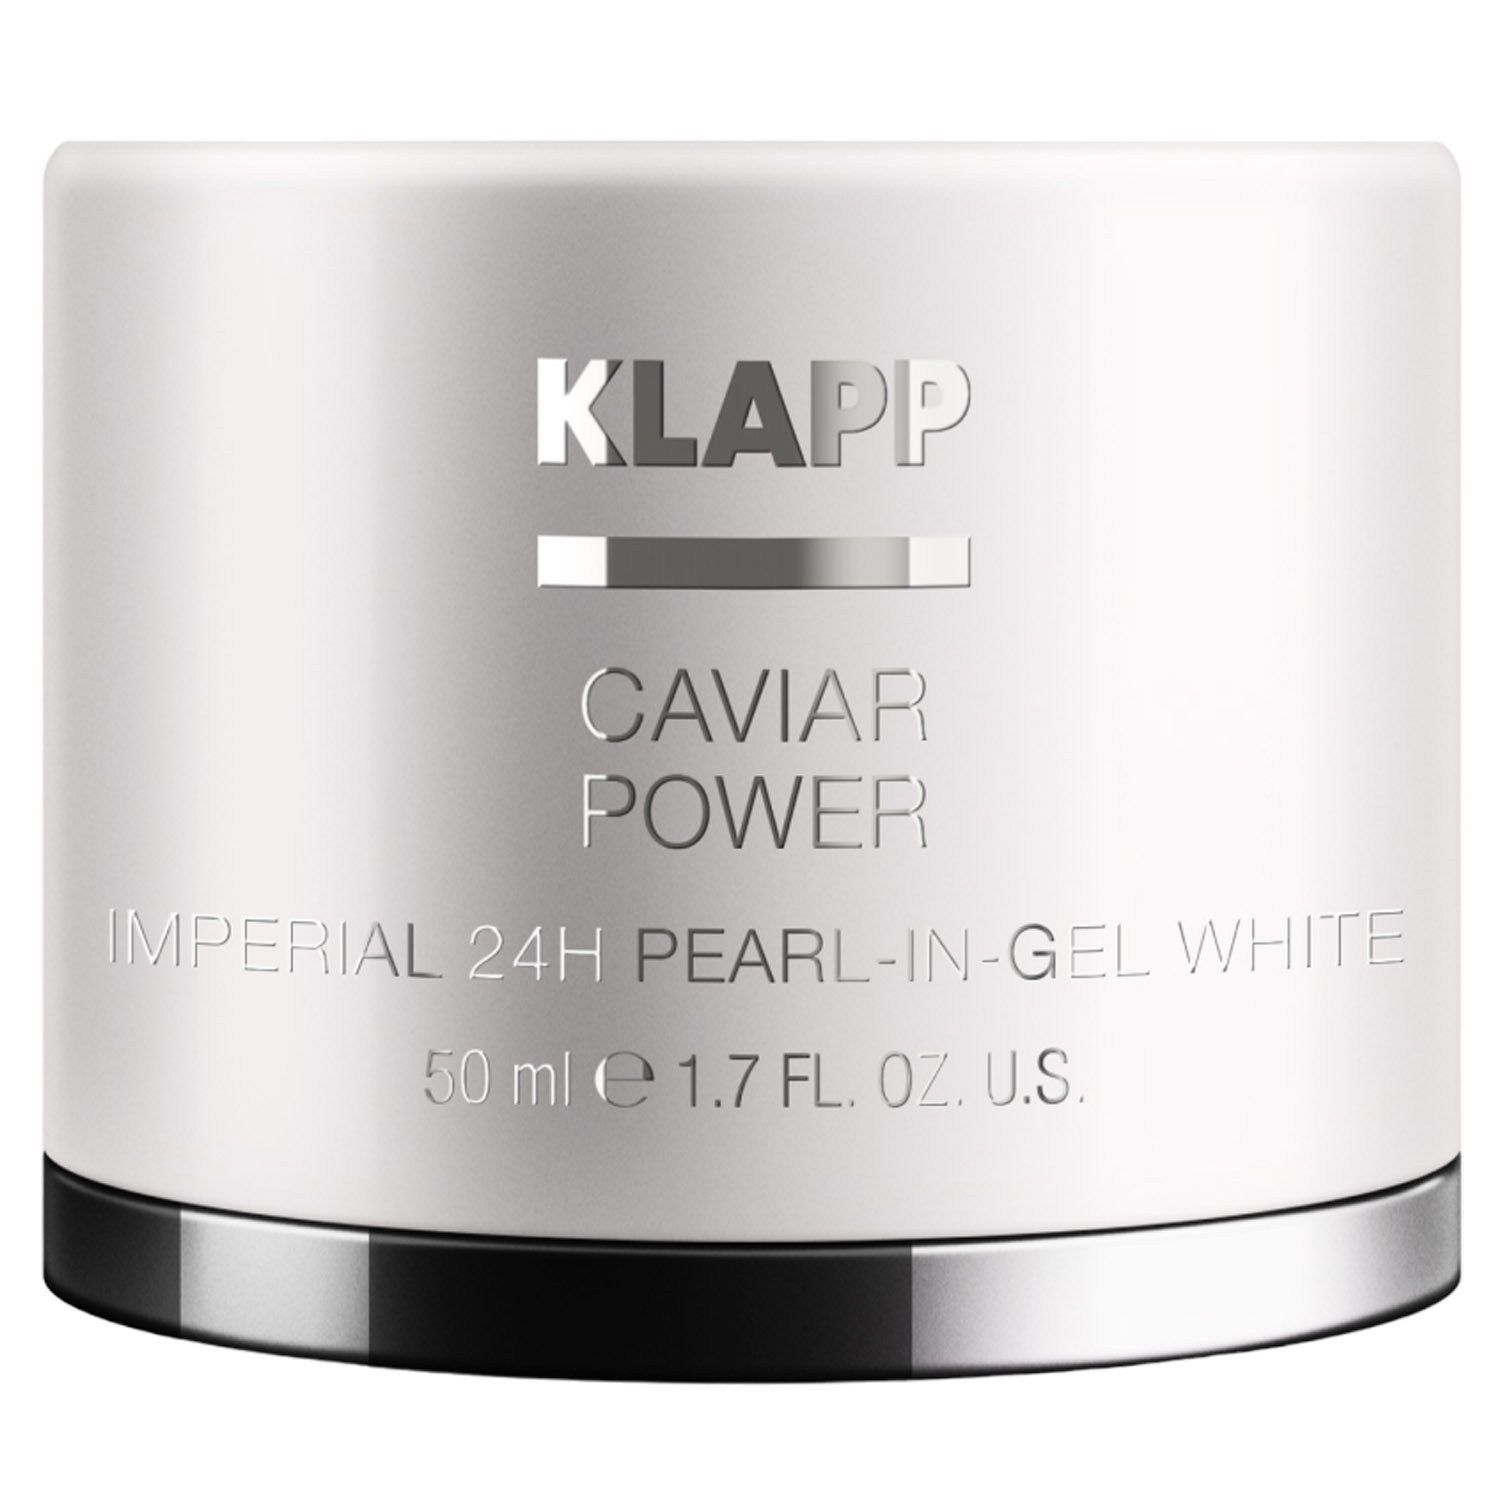 Крем для лица Klapp Caviar Power Imperial 24H Pearl-in-Gel White, 50 мл - фото 1